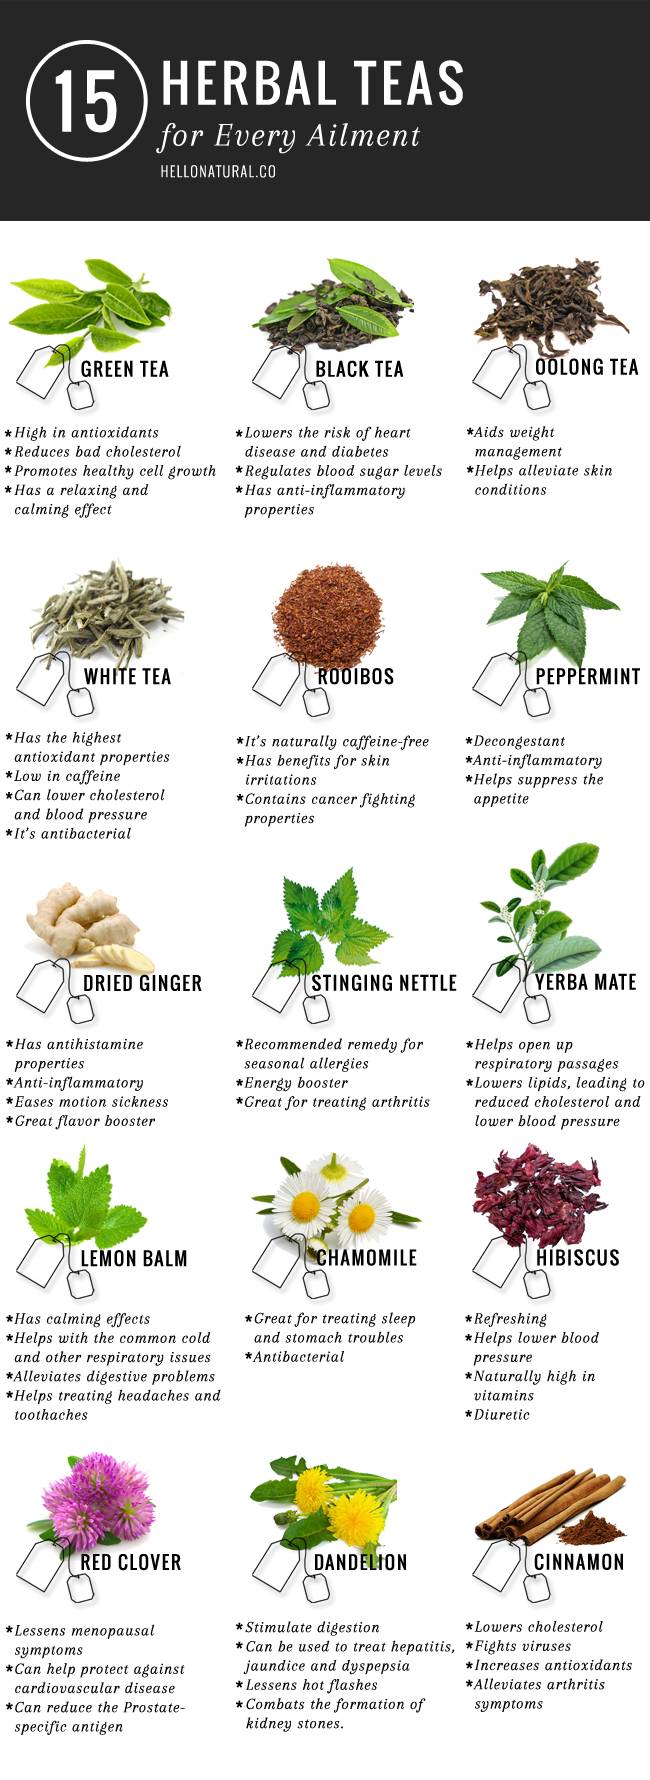 15-herbal-teas-for-every-ailment